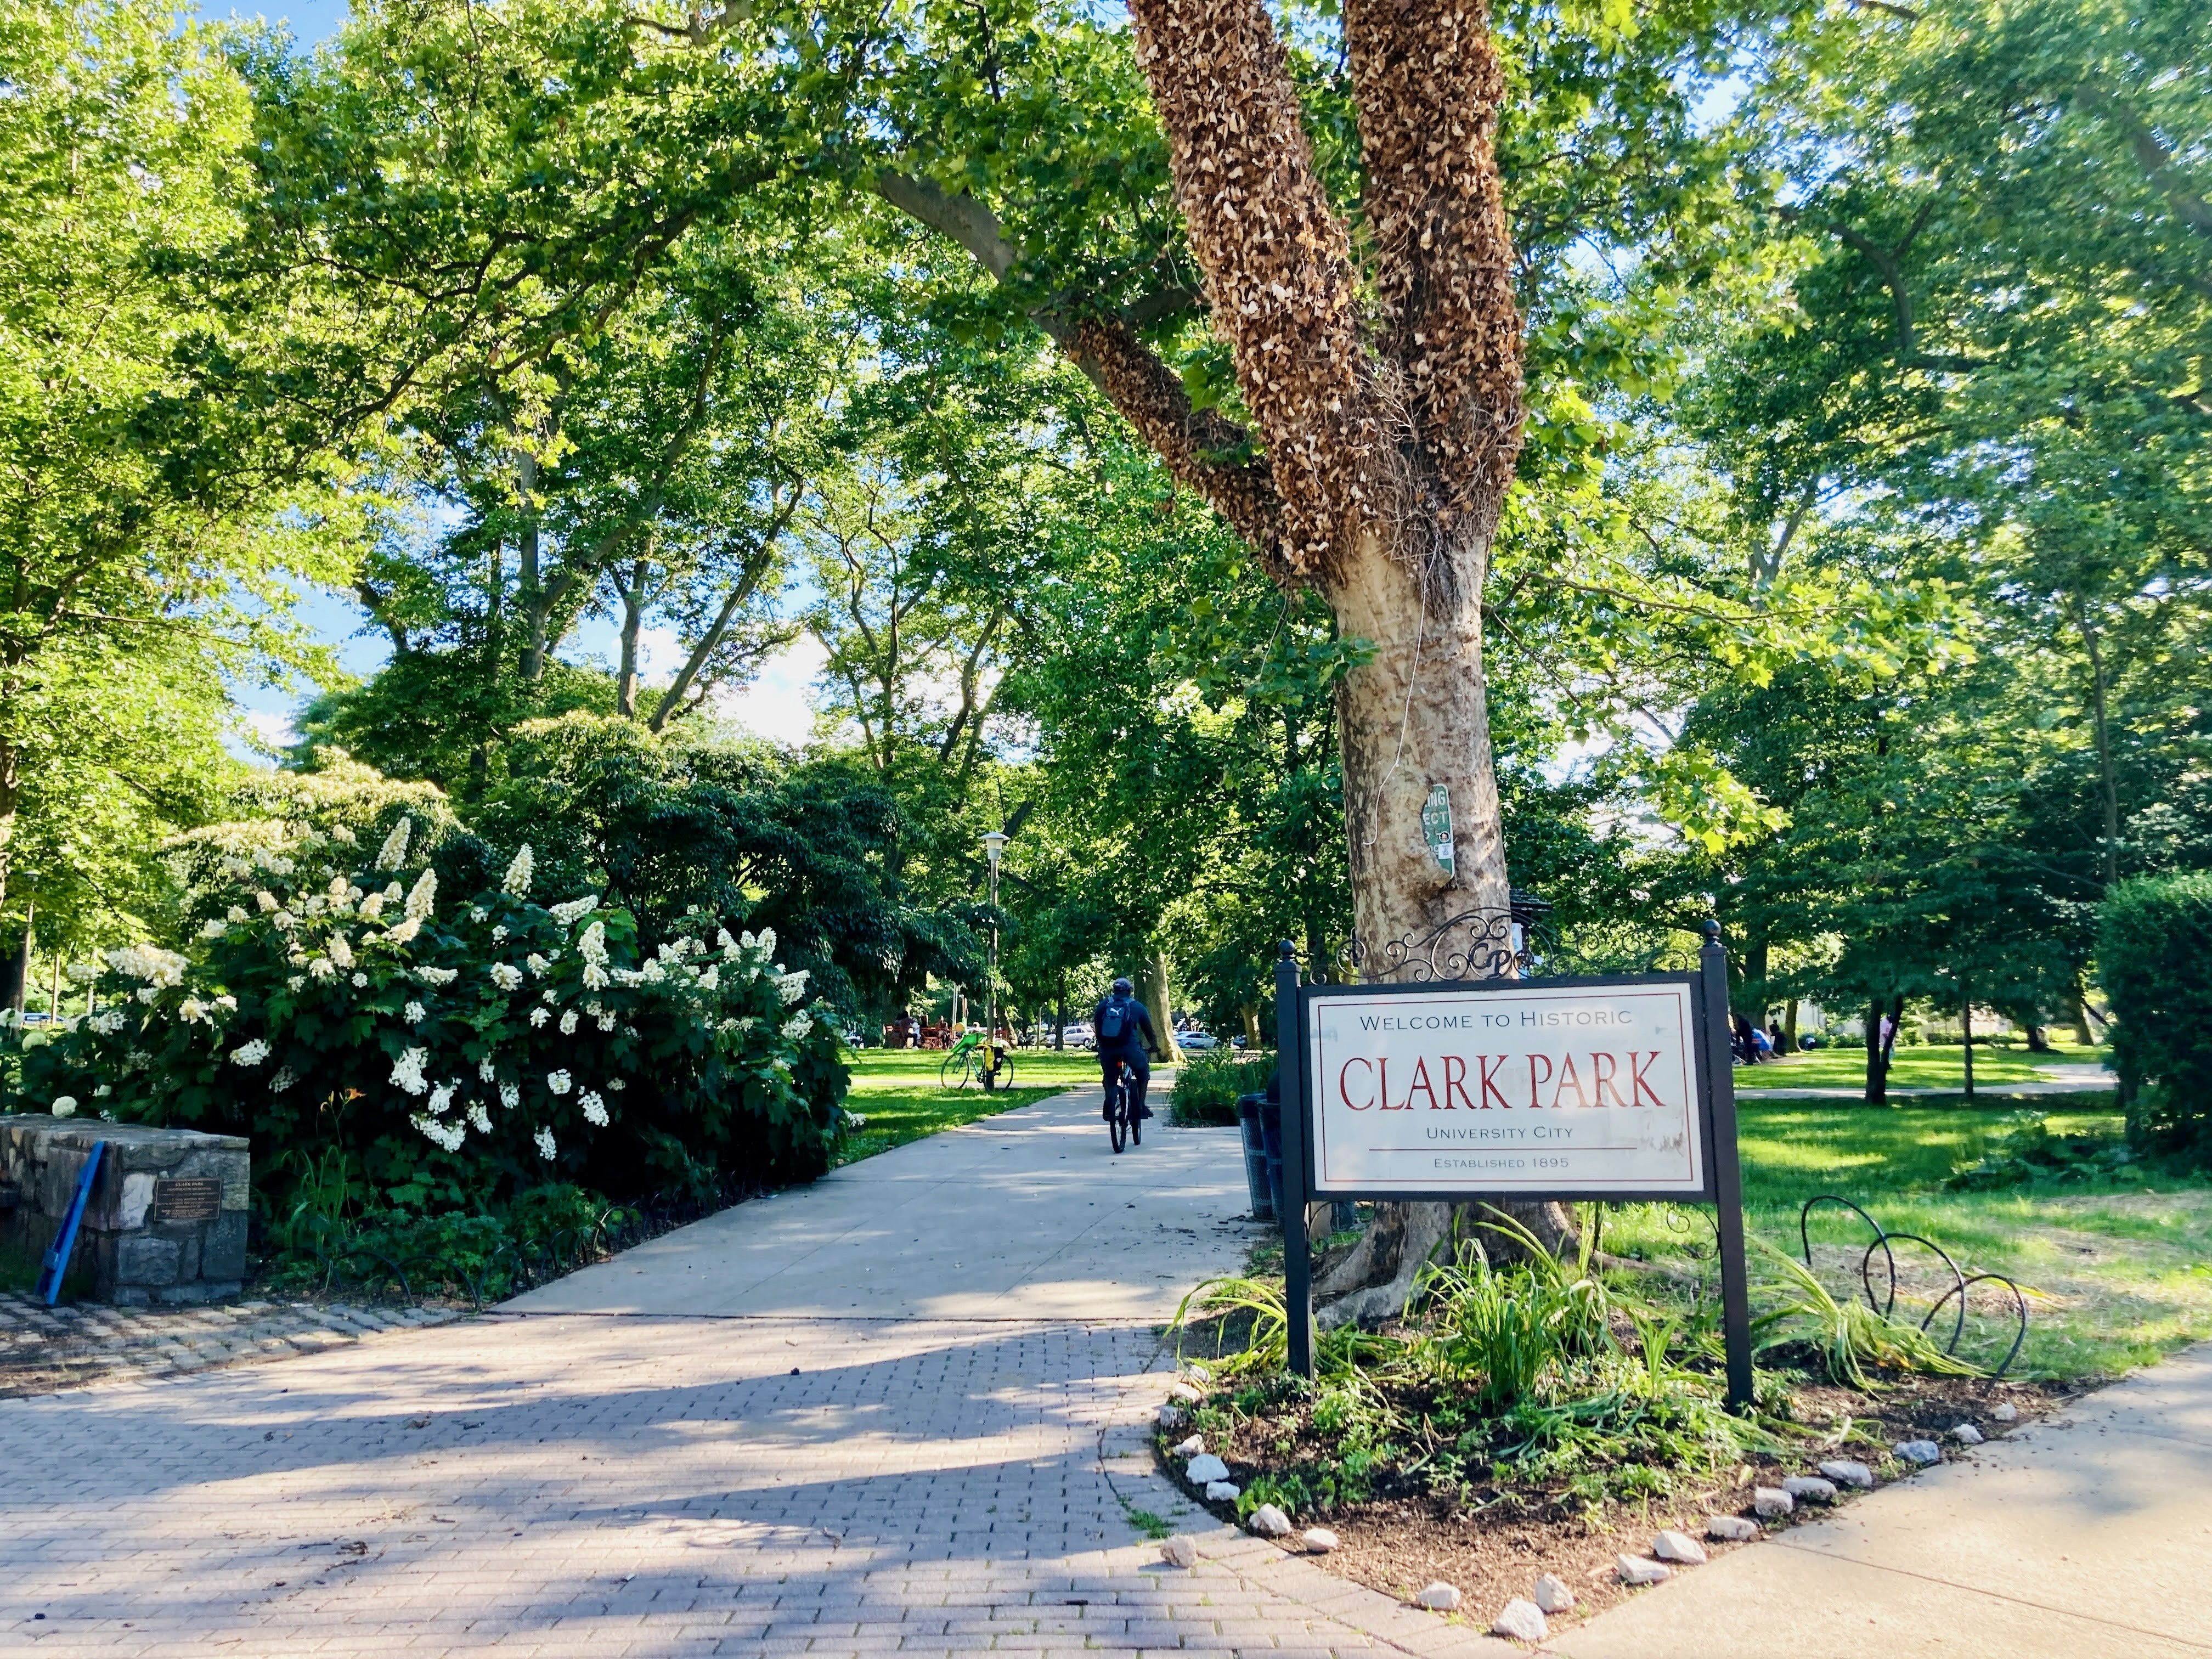 Clark Park in University City, PA